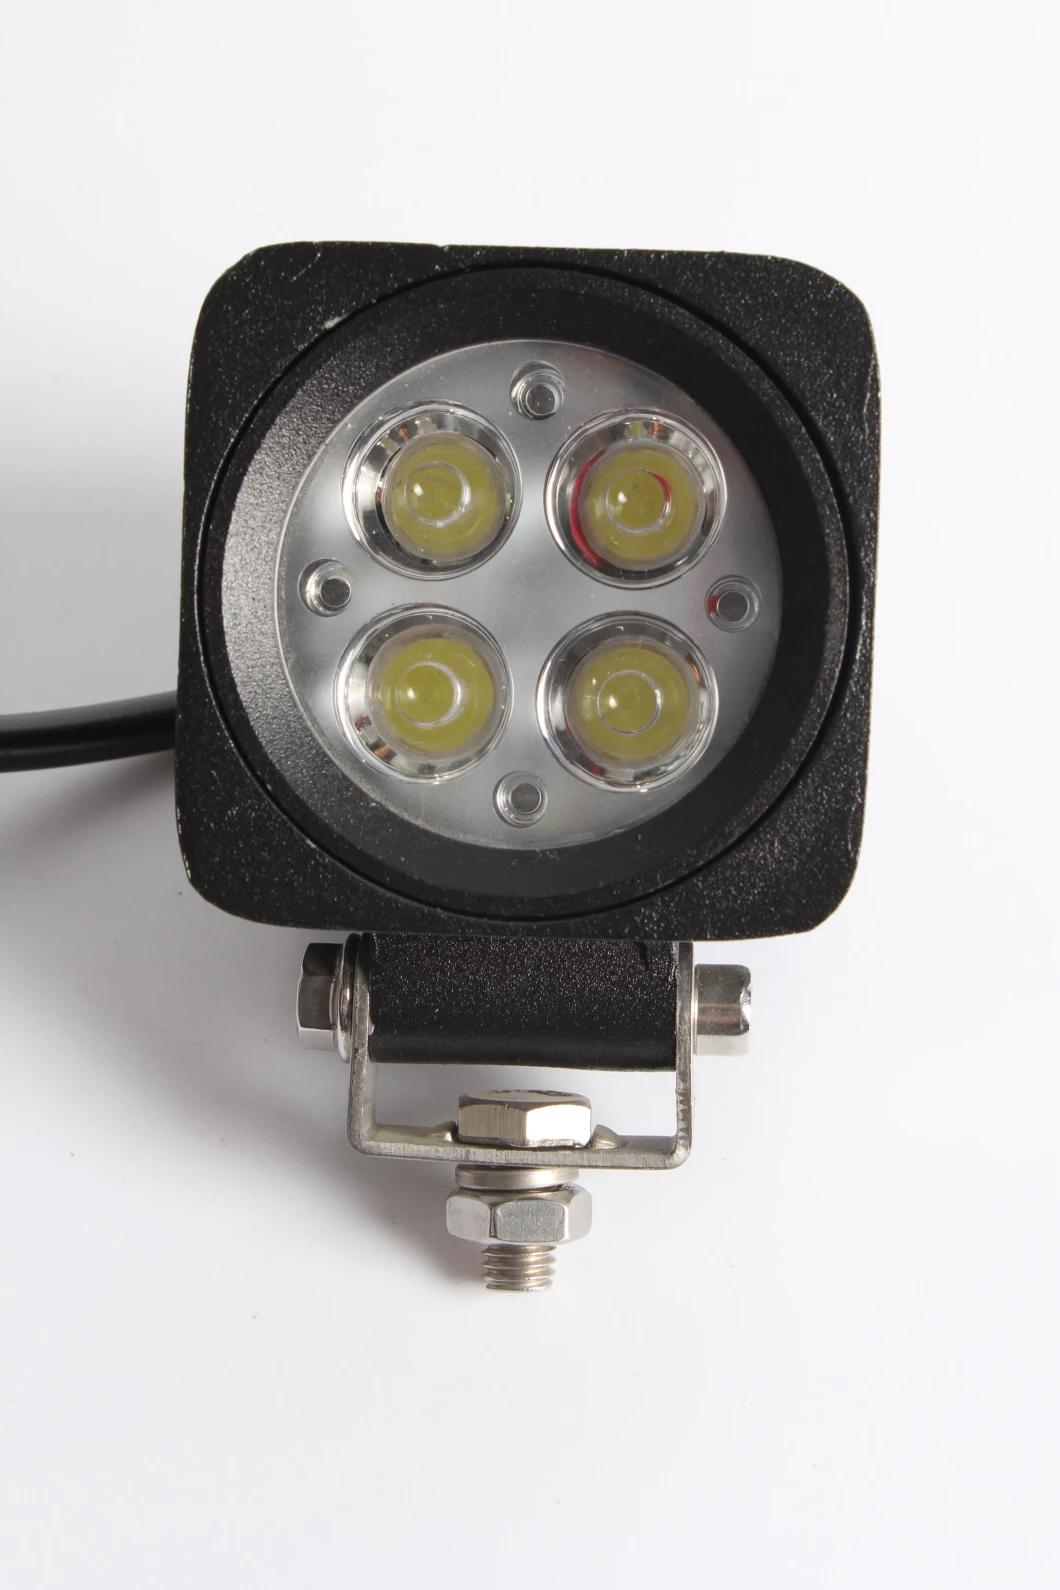 4 LEDs Work Light Warning Driving Lights for Car Offroad Truck